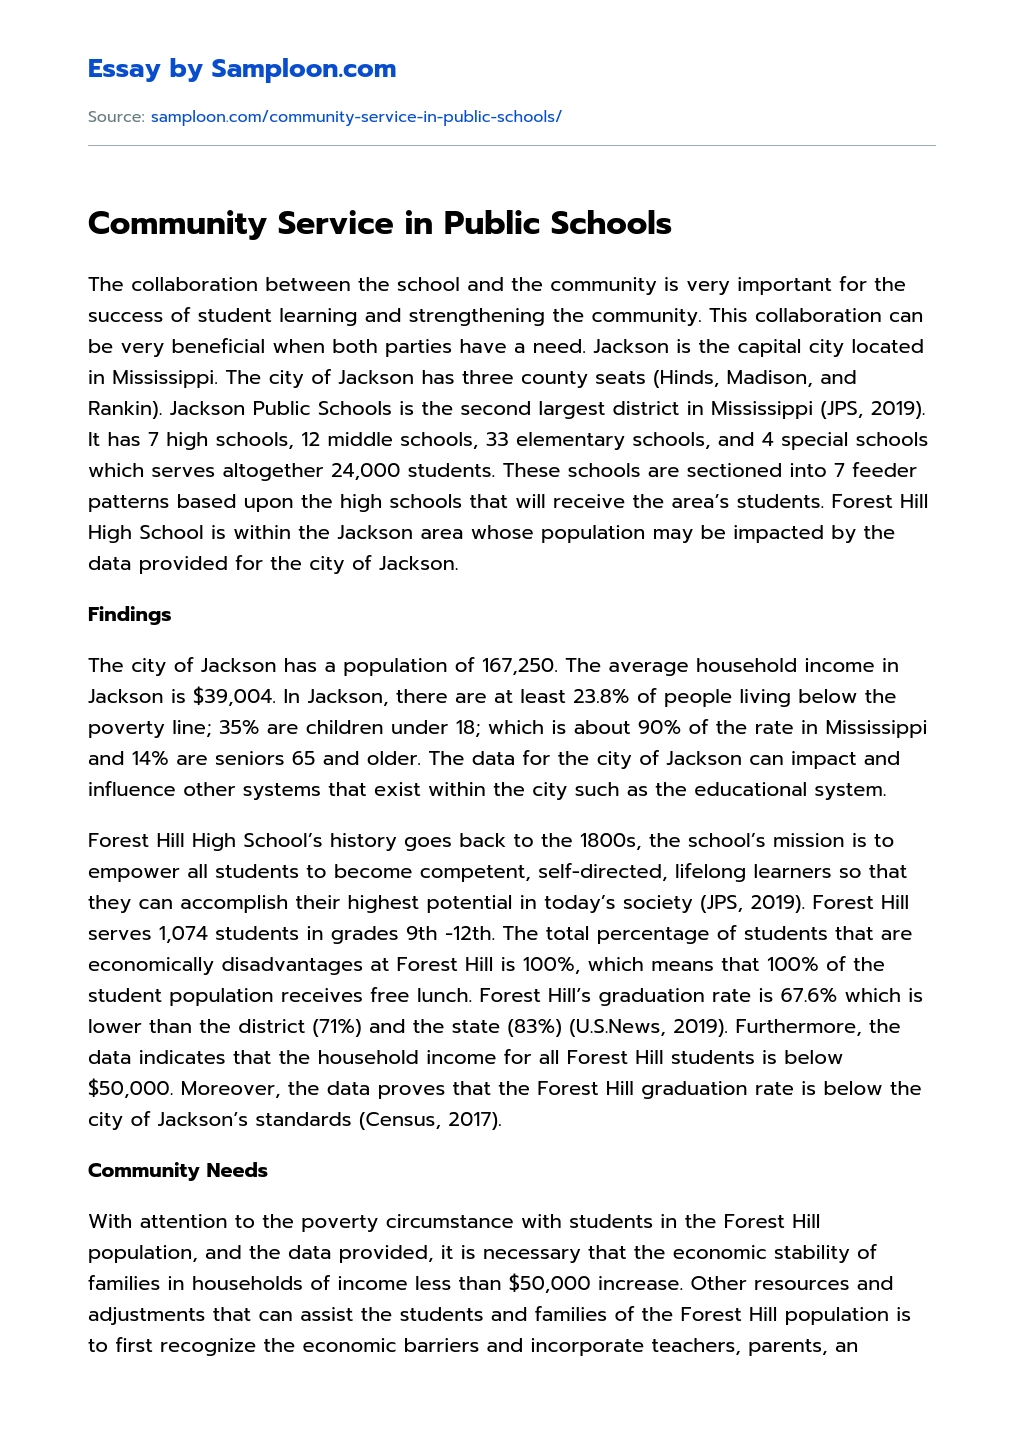 Community Service in Public Schools essay